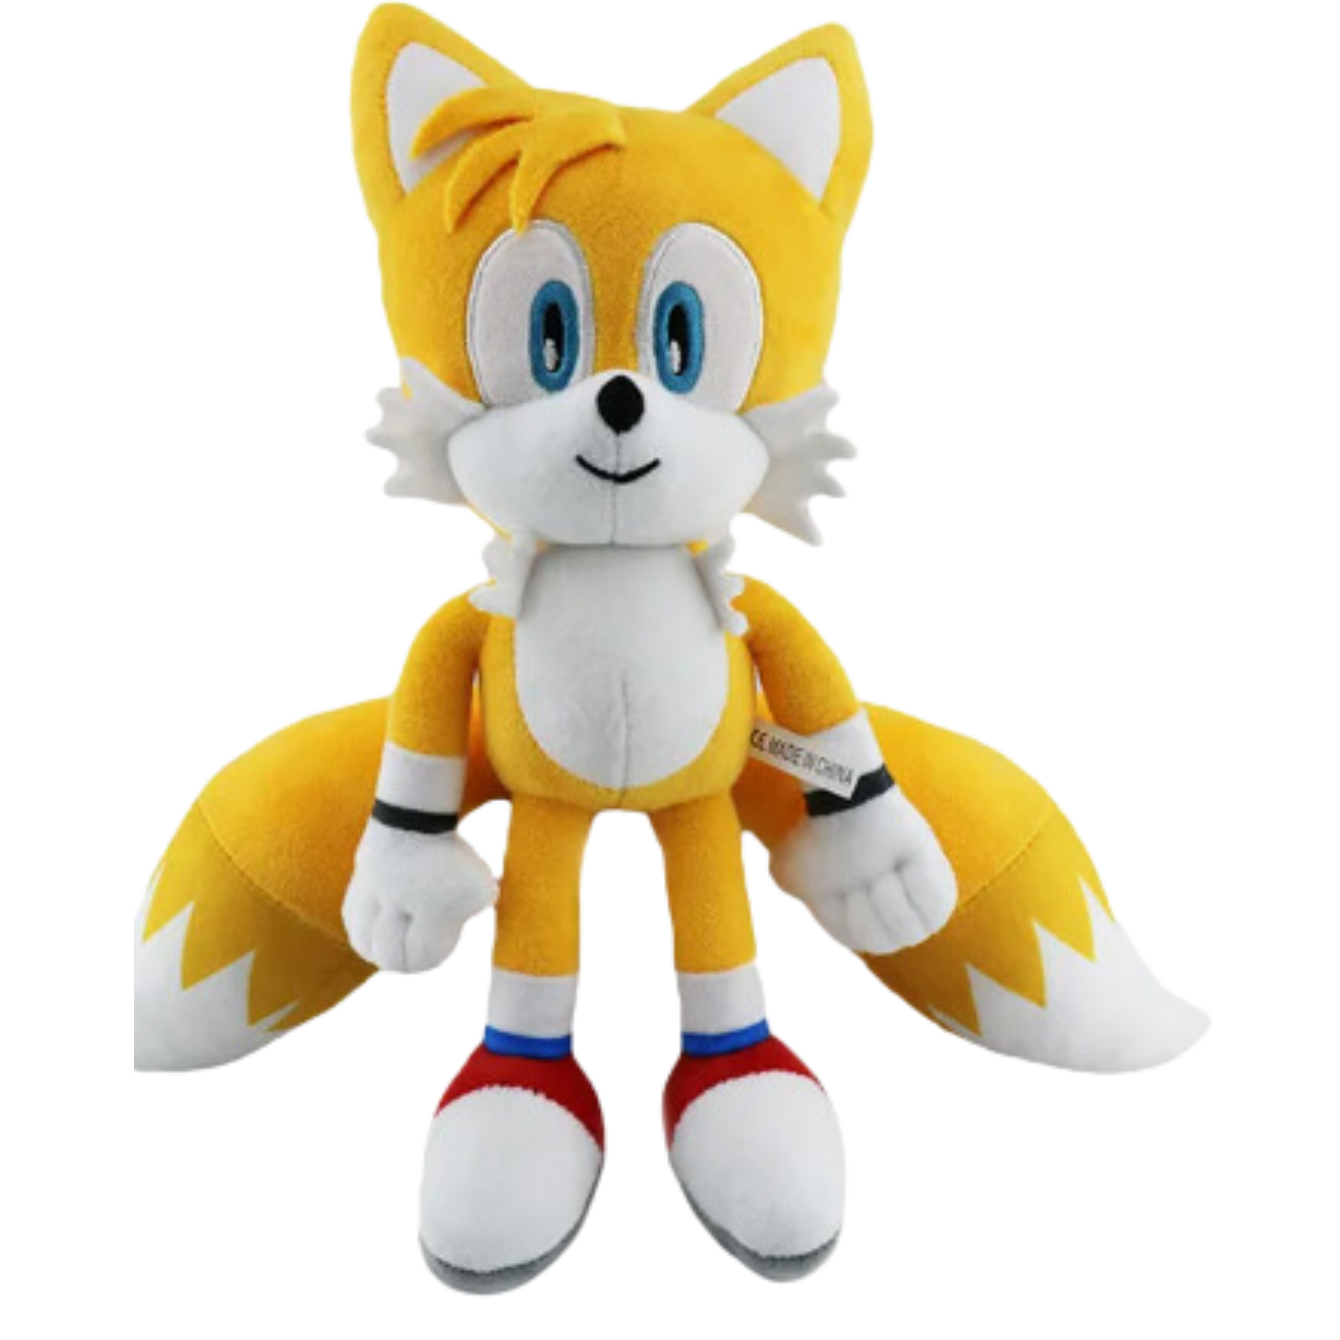 Tails Sonic Plush